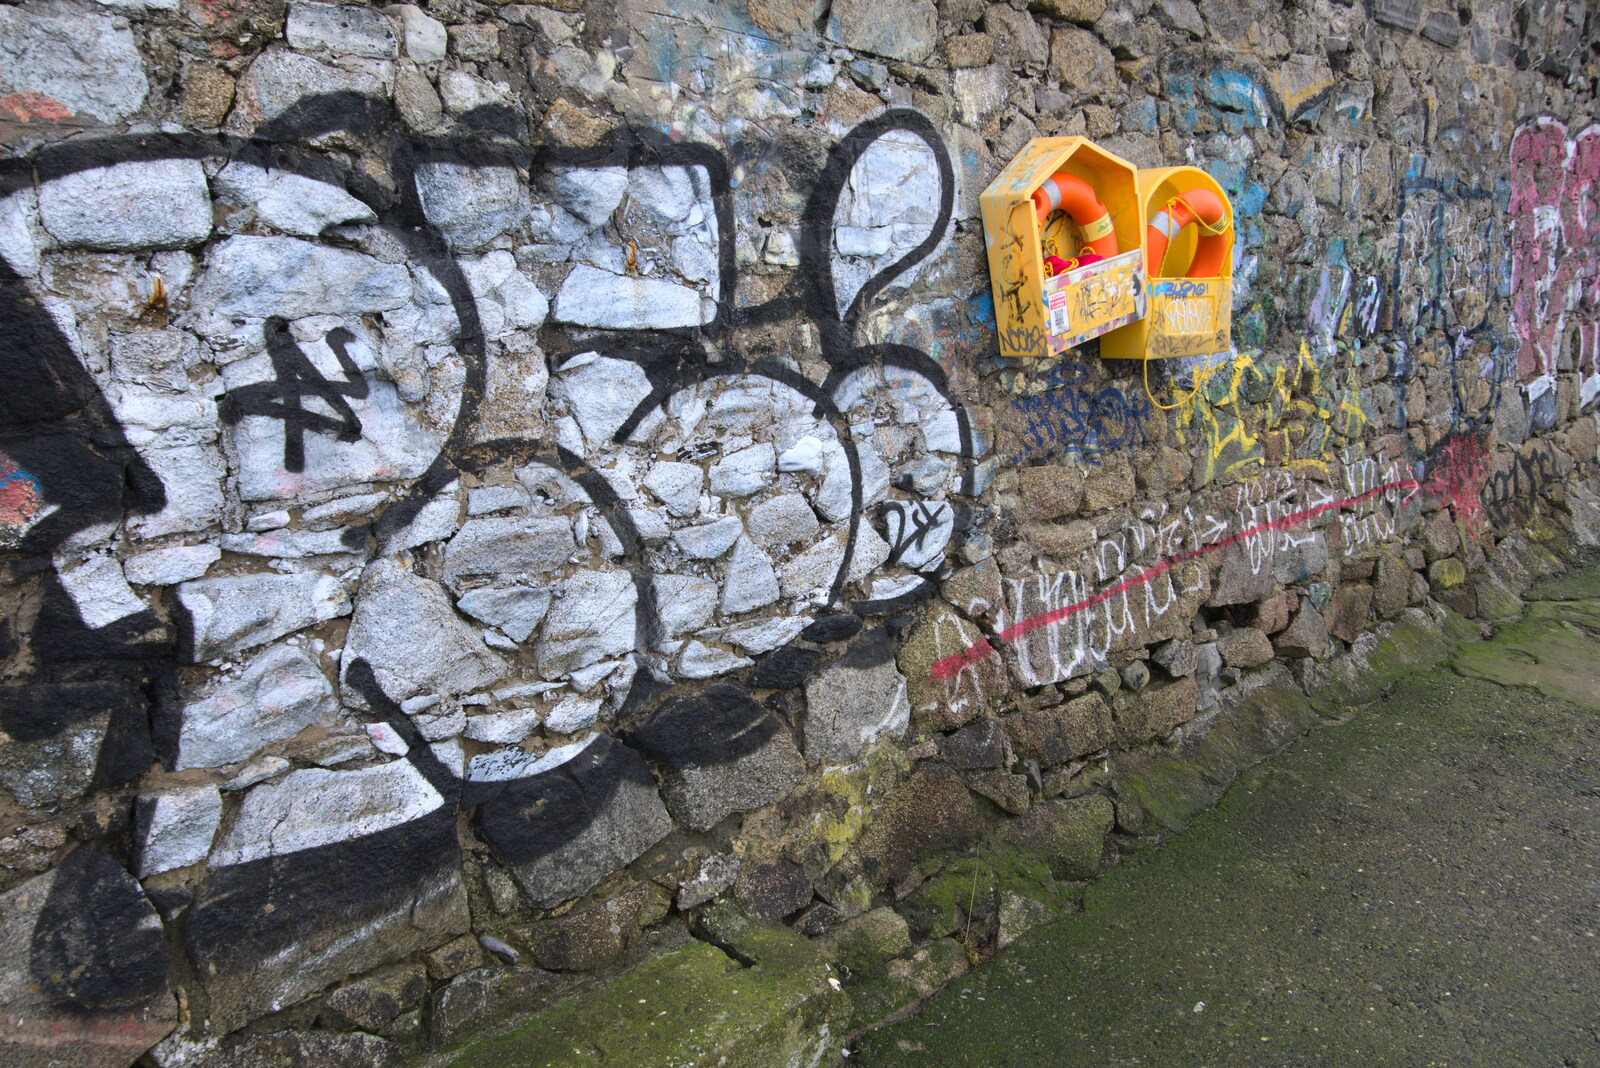 The End of the Breffni, Blackrock, Dublin - 18th February 2023: Graffiti on the sea wall